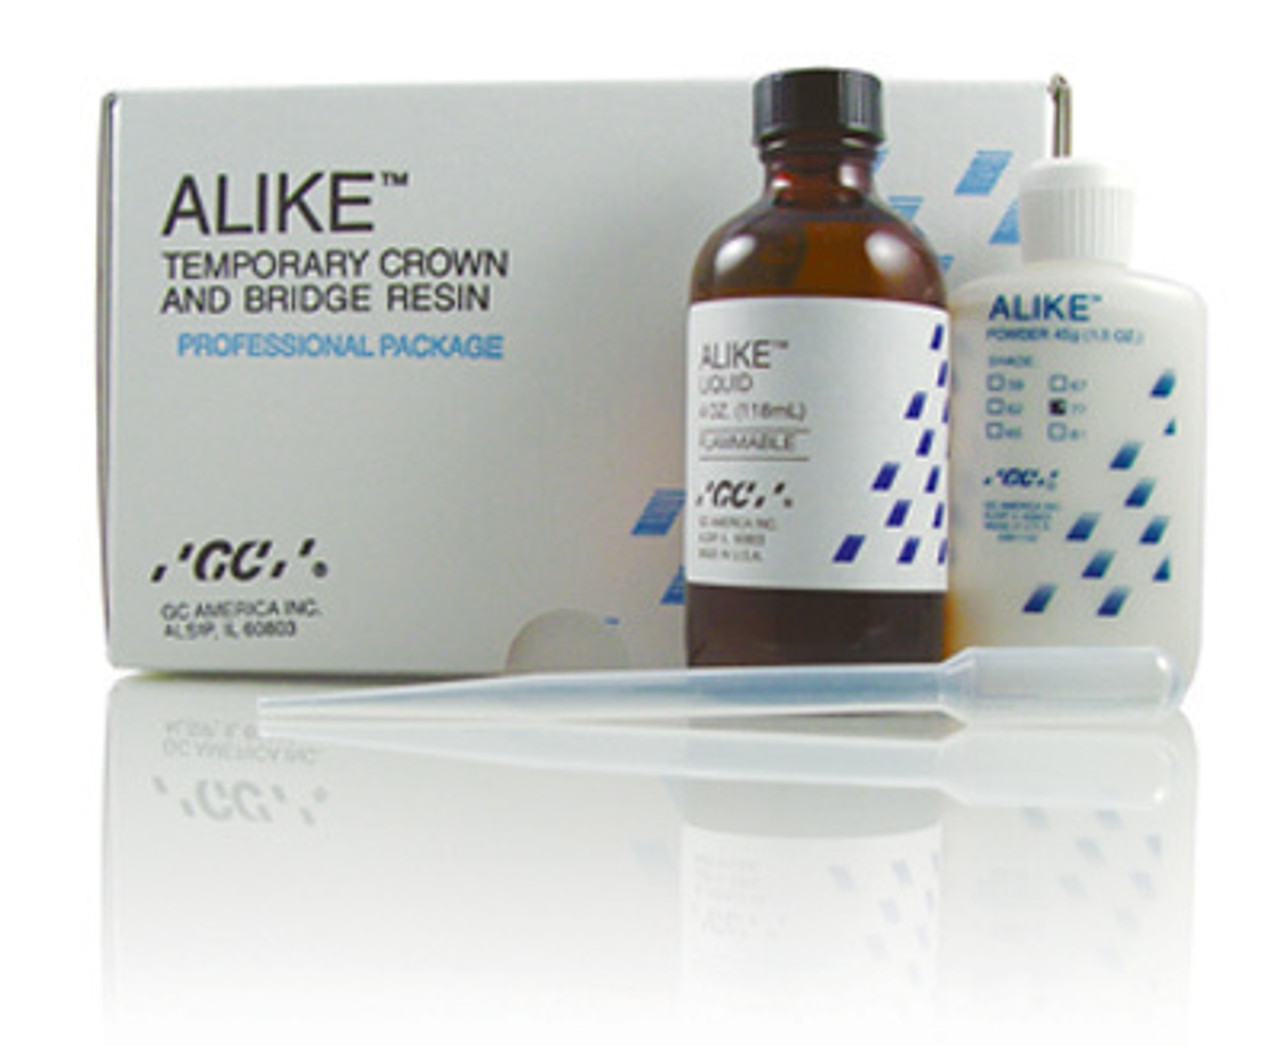 ALIKE Small Powder Only - Refill B3, GC America, 340515